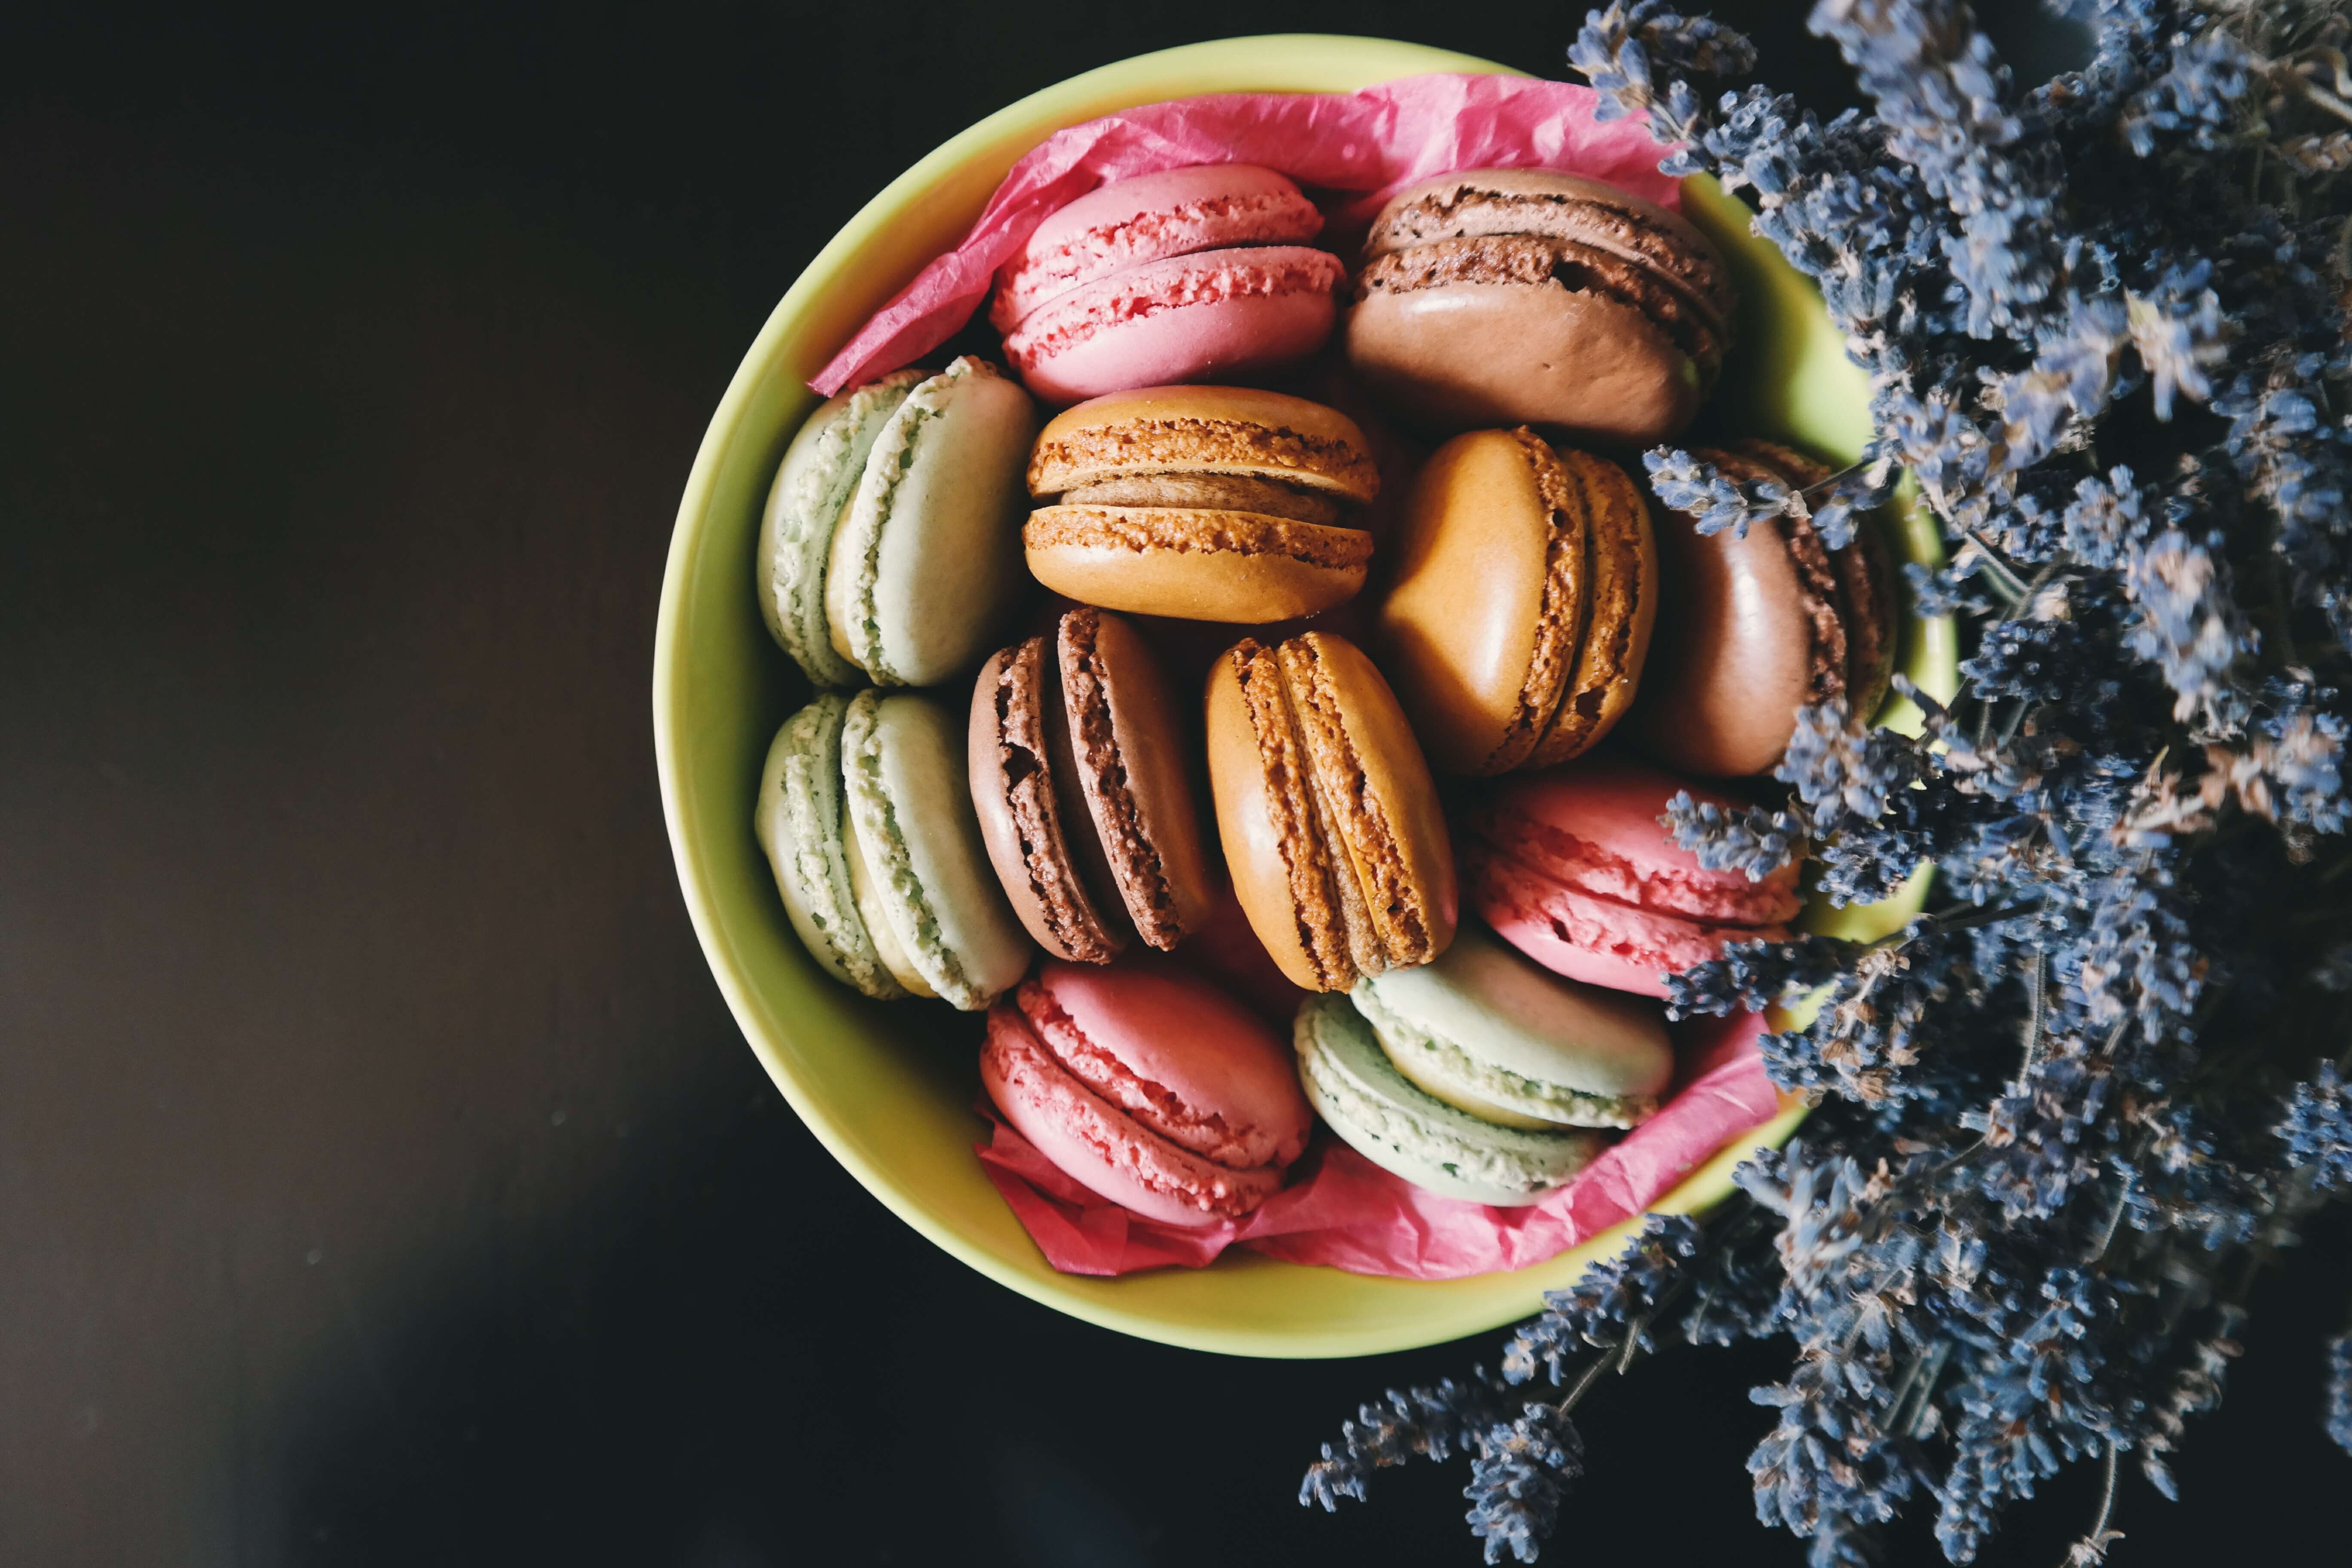 postres franceses: macarons de colores dentro de un bol